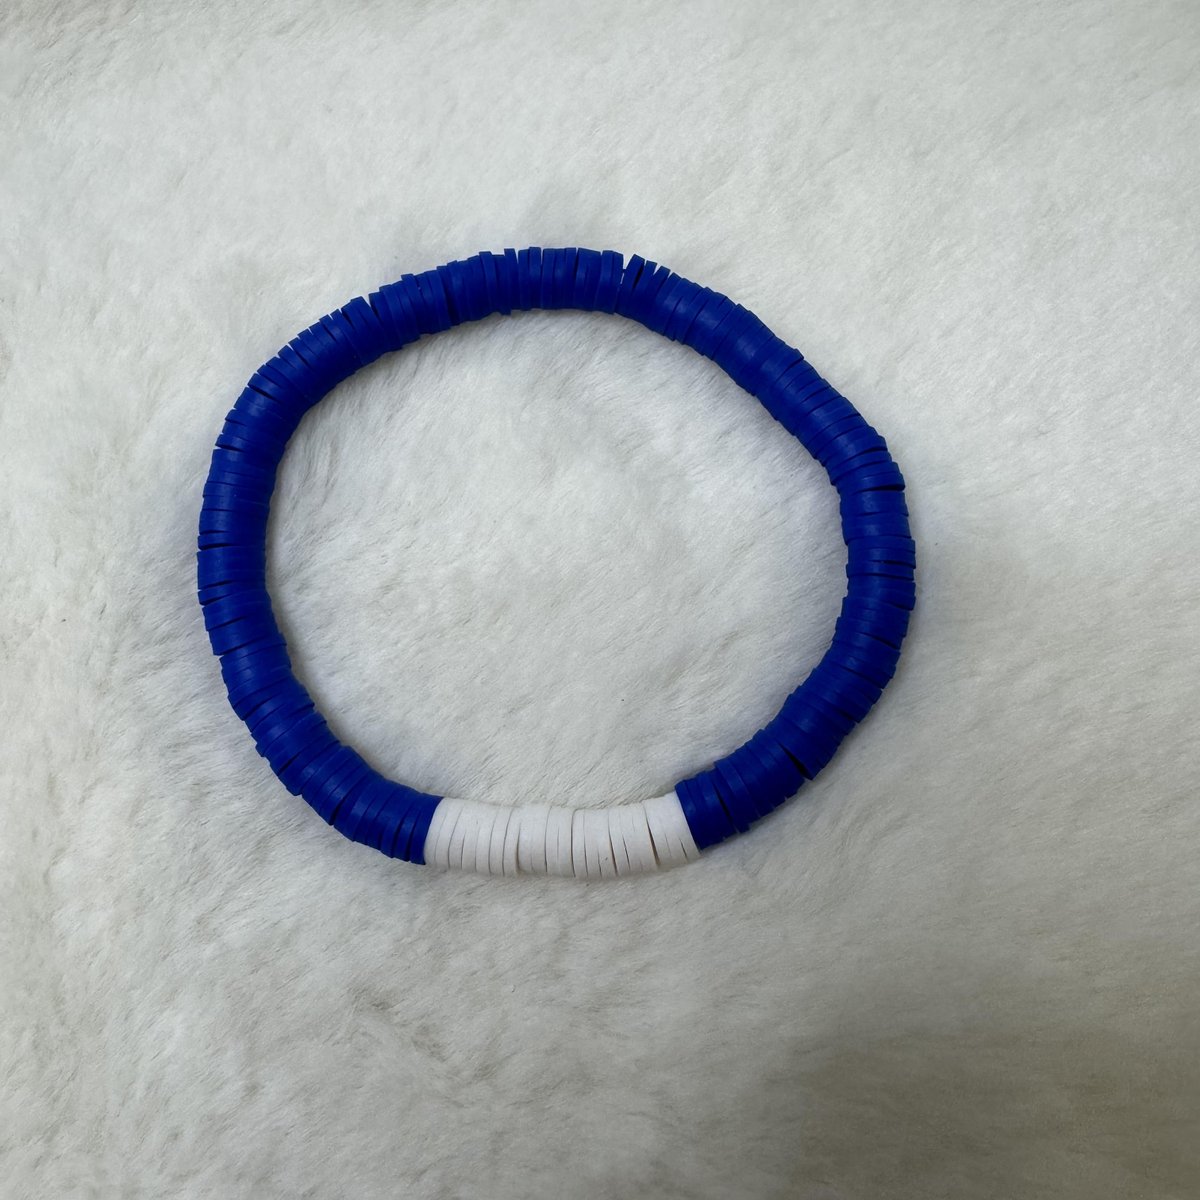 Navy Blue Heishi Clay Bead Bracelet #2

aldesignsbyashley.etsy.com

#etsyshop #etsyseller #etsyhandmade #etsy #handmade #handmadejewelry #handmadeearrings #earrings #handmadeearringsforsale #earringstyle #etsygifts #etsysellersofinstagram #jewelry #jewelrydesign